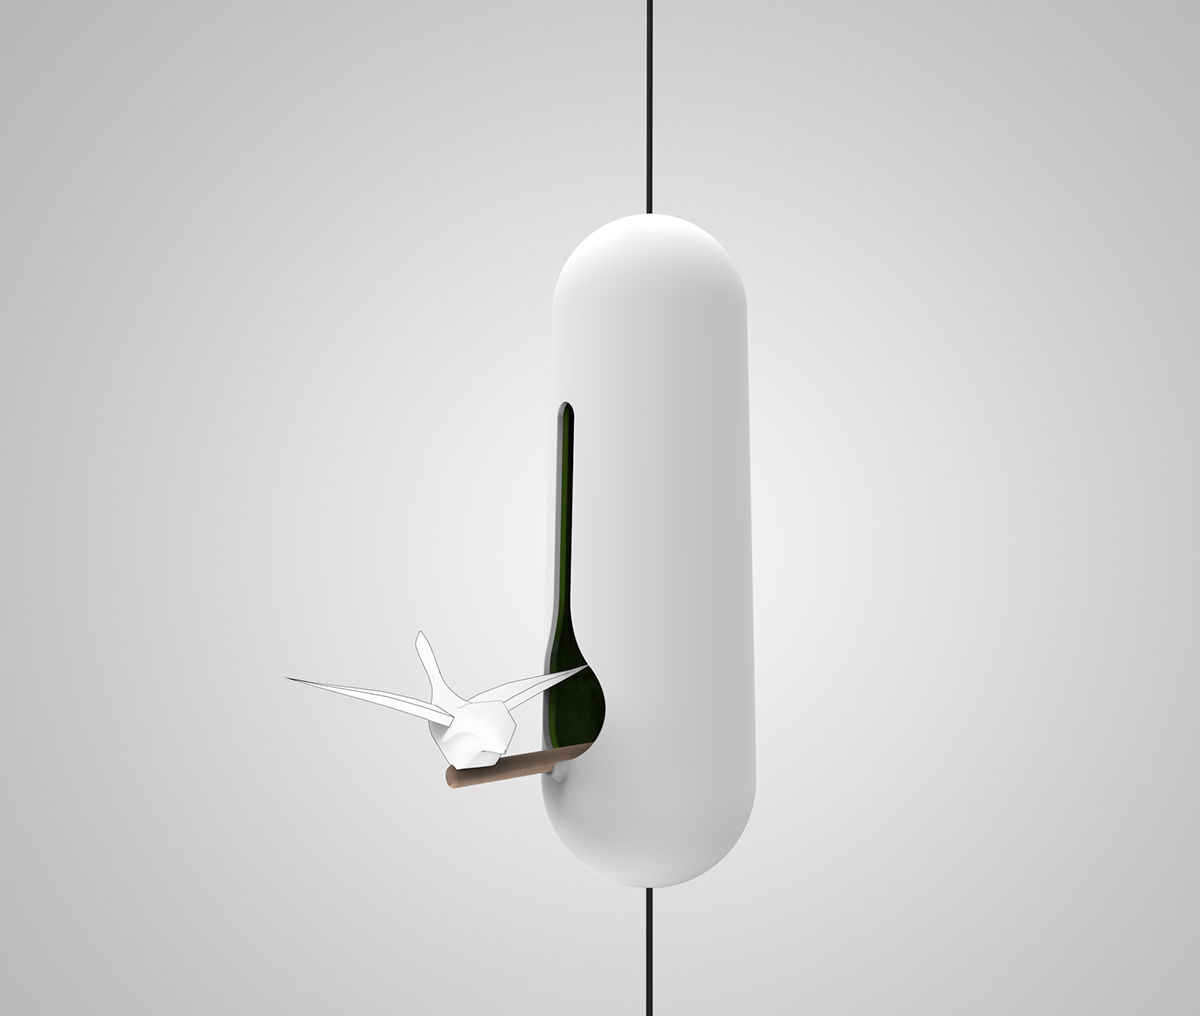 Birdhouse sculpture design interiordesign decor bird art RECYCLED productdesign restaurant